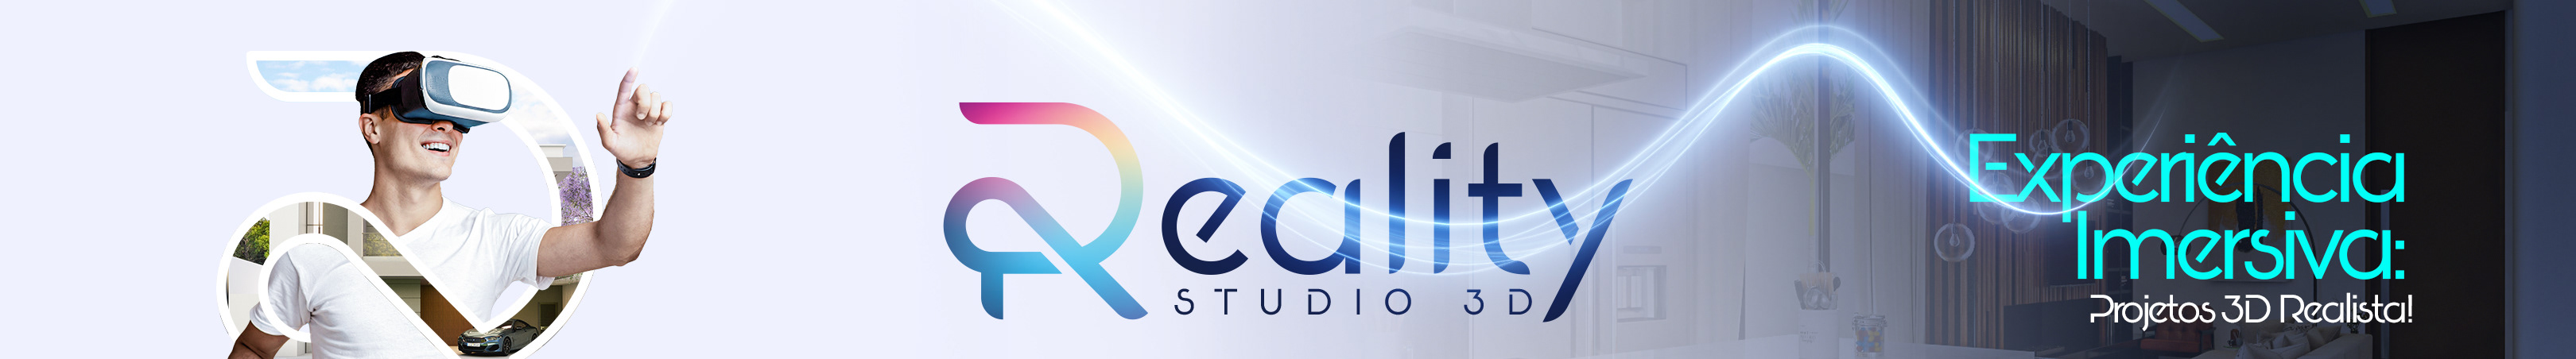 RealityStudio3D 3d 的个人资料横幅